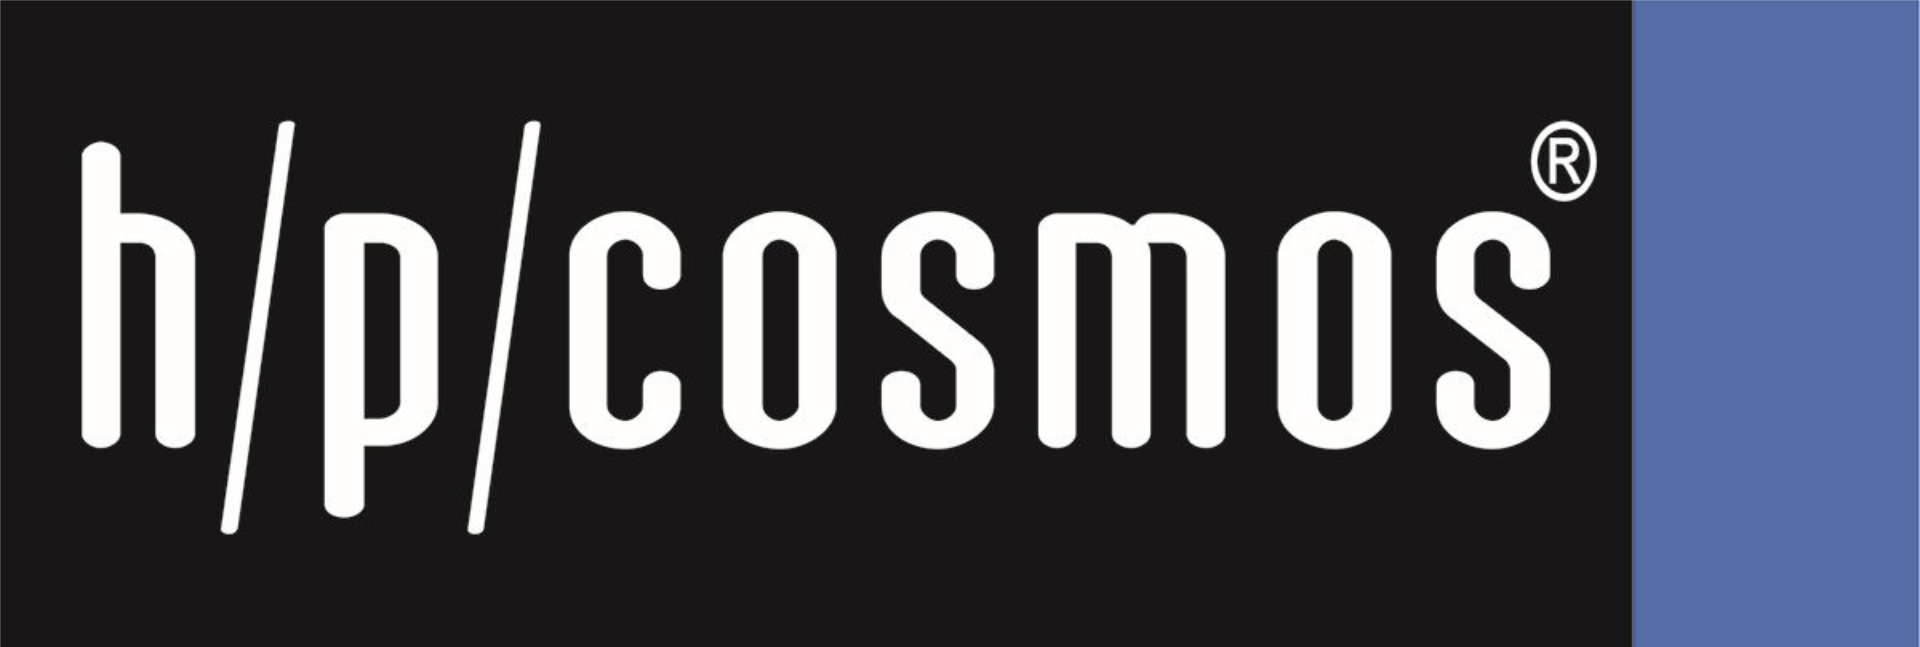 prophysics - Logo h/p/cosmos